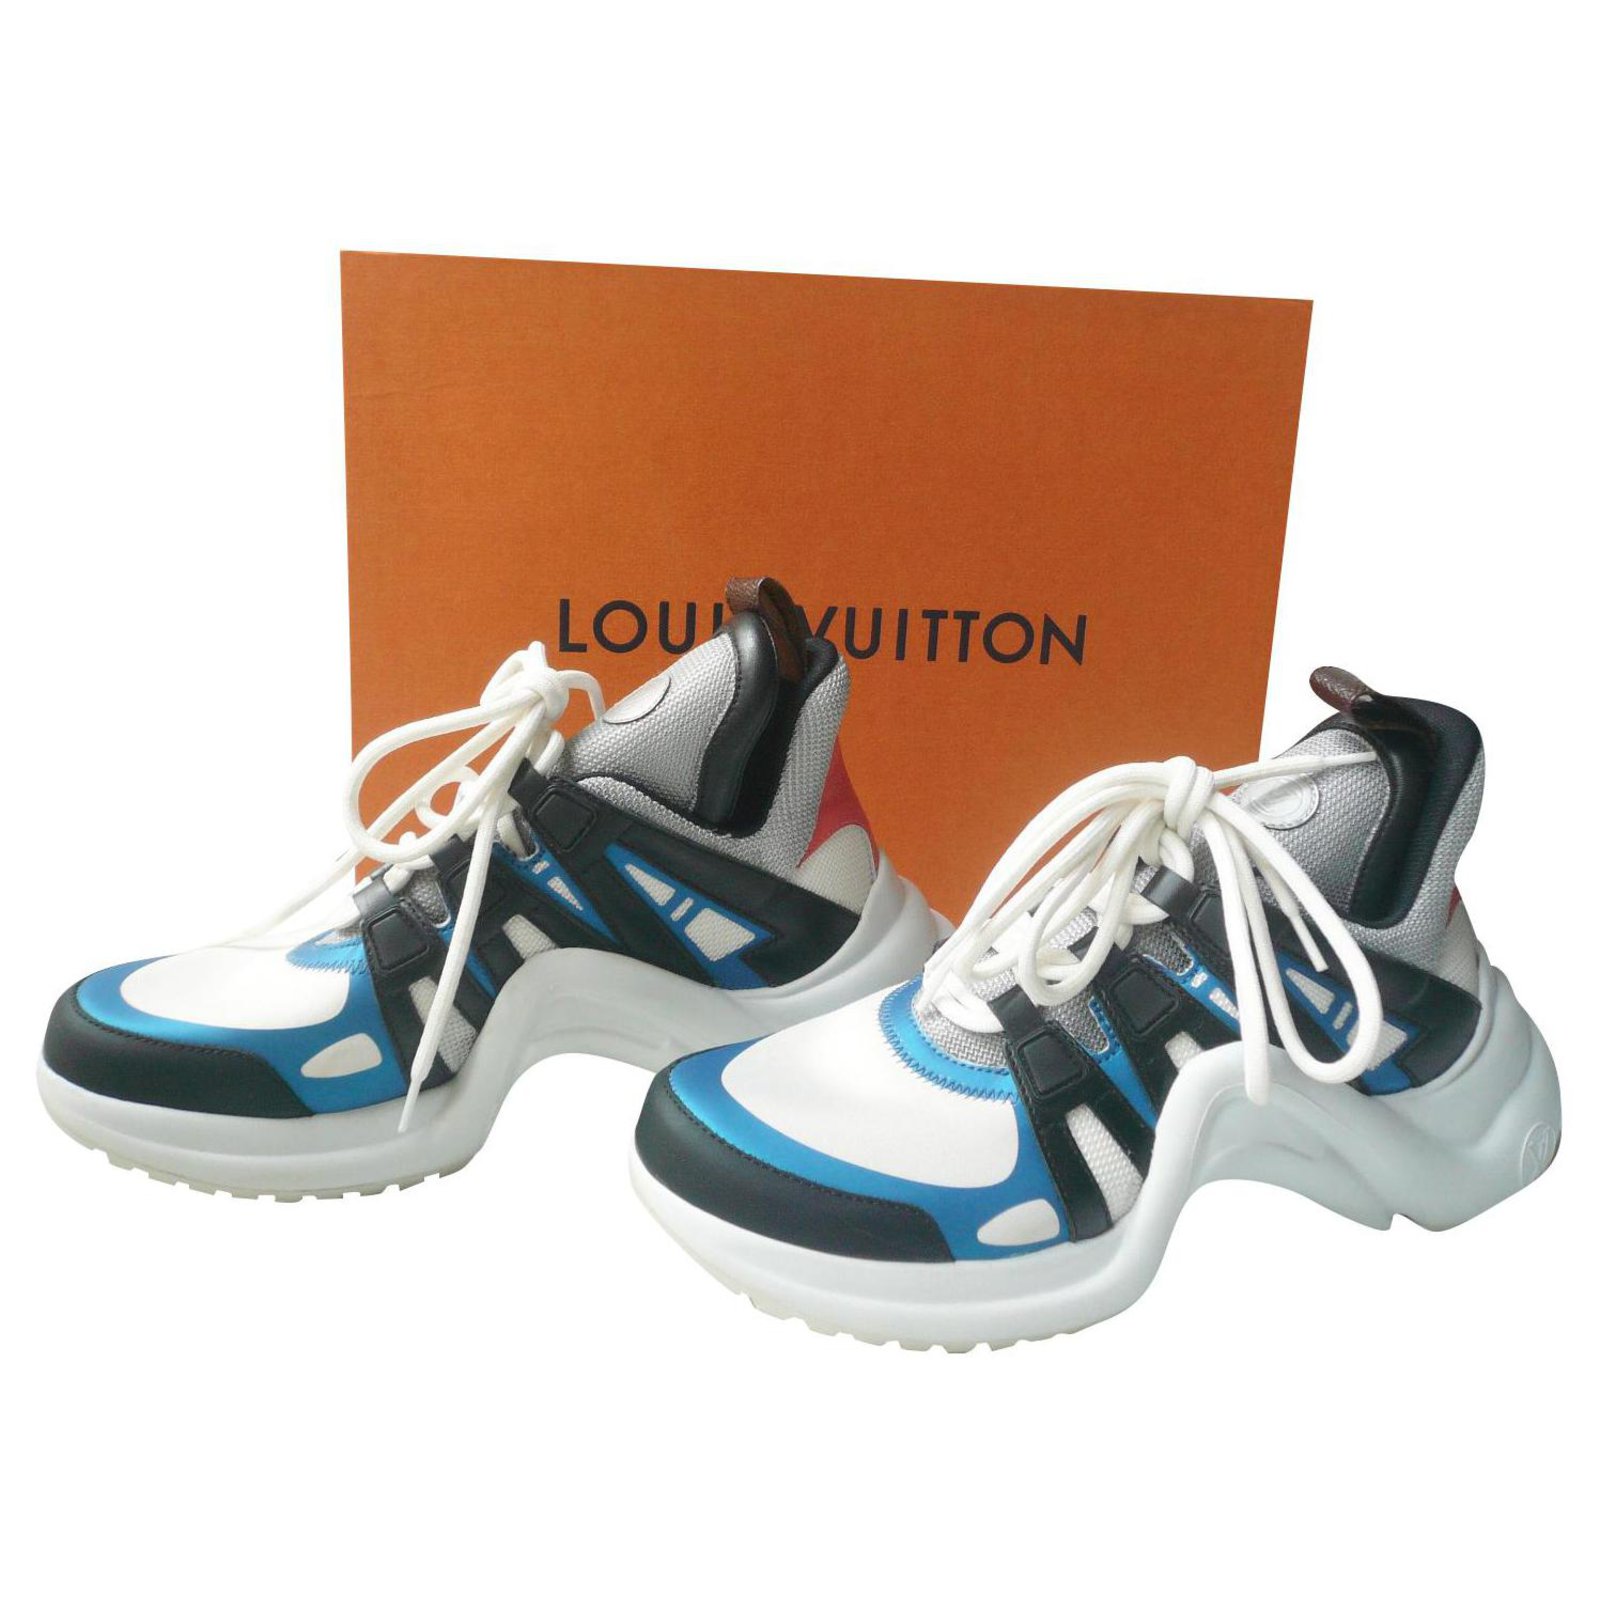 Louis Vuitton LV Archlight Sneaker